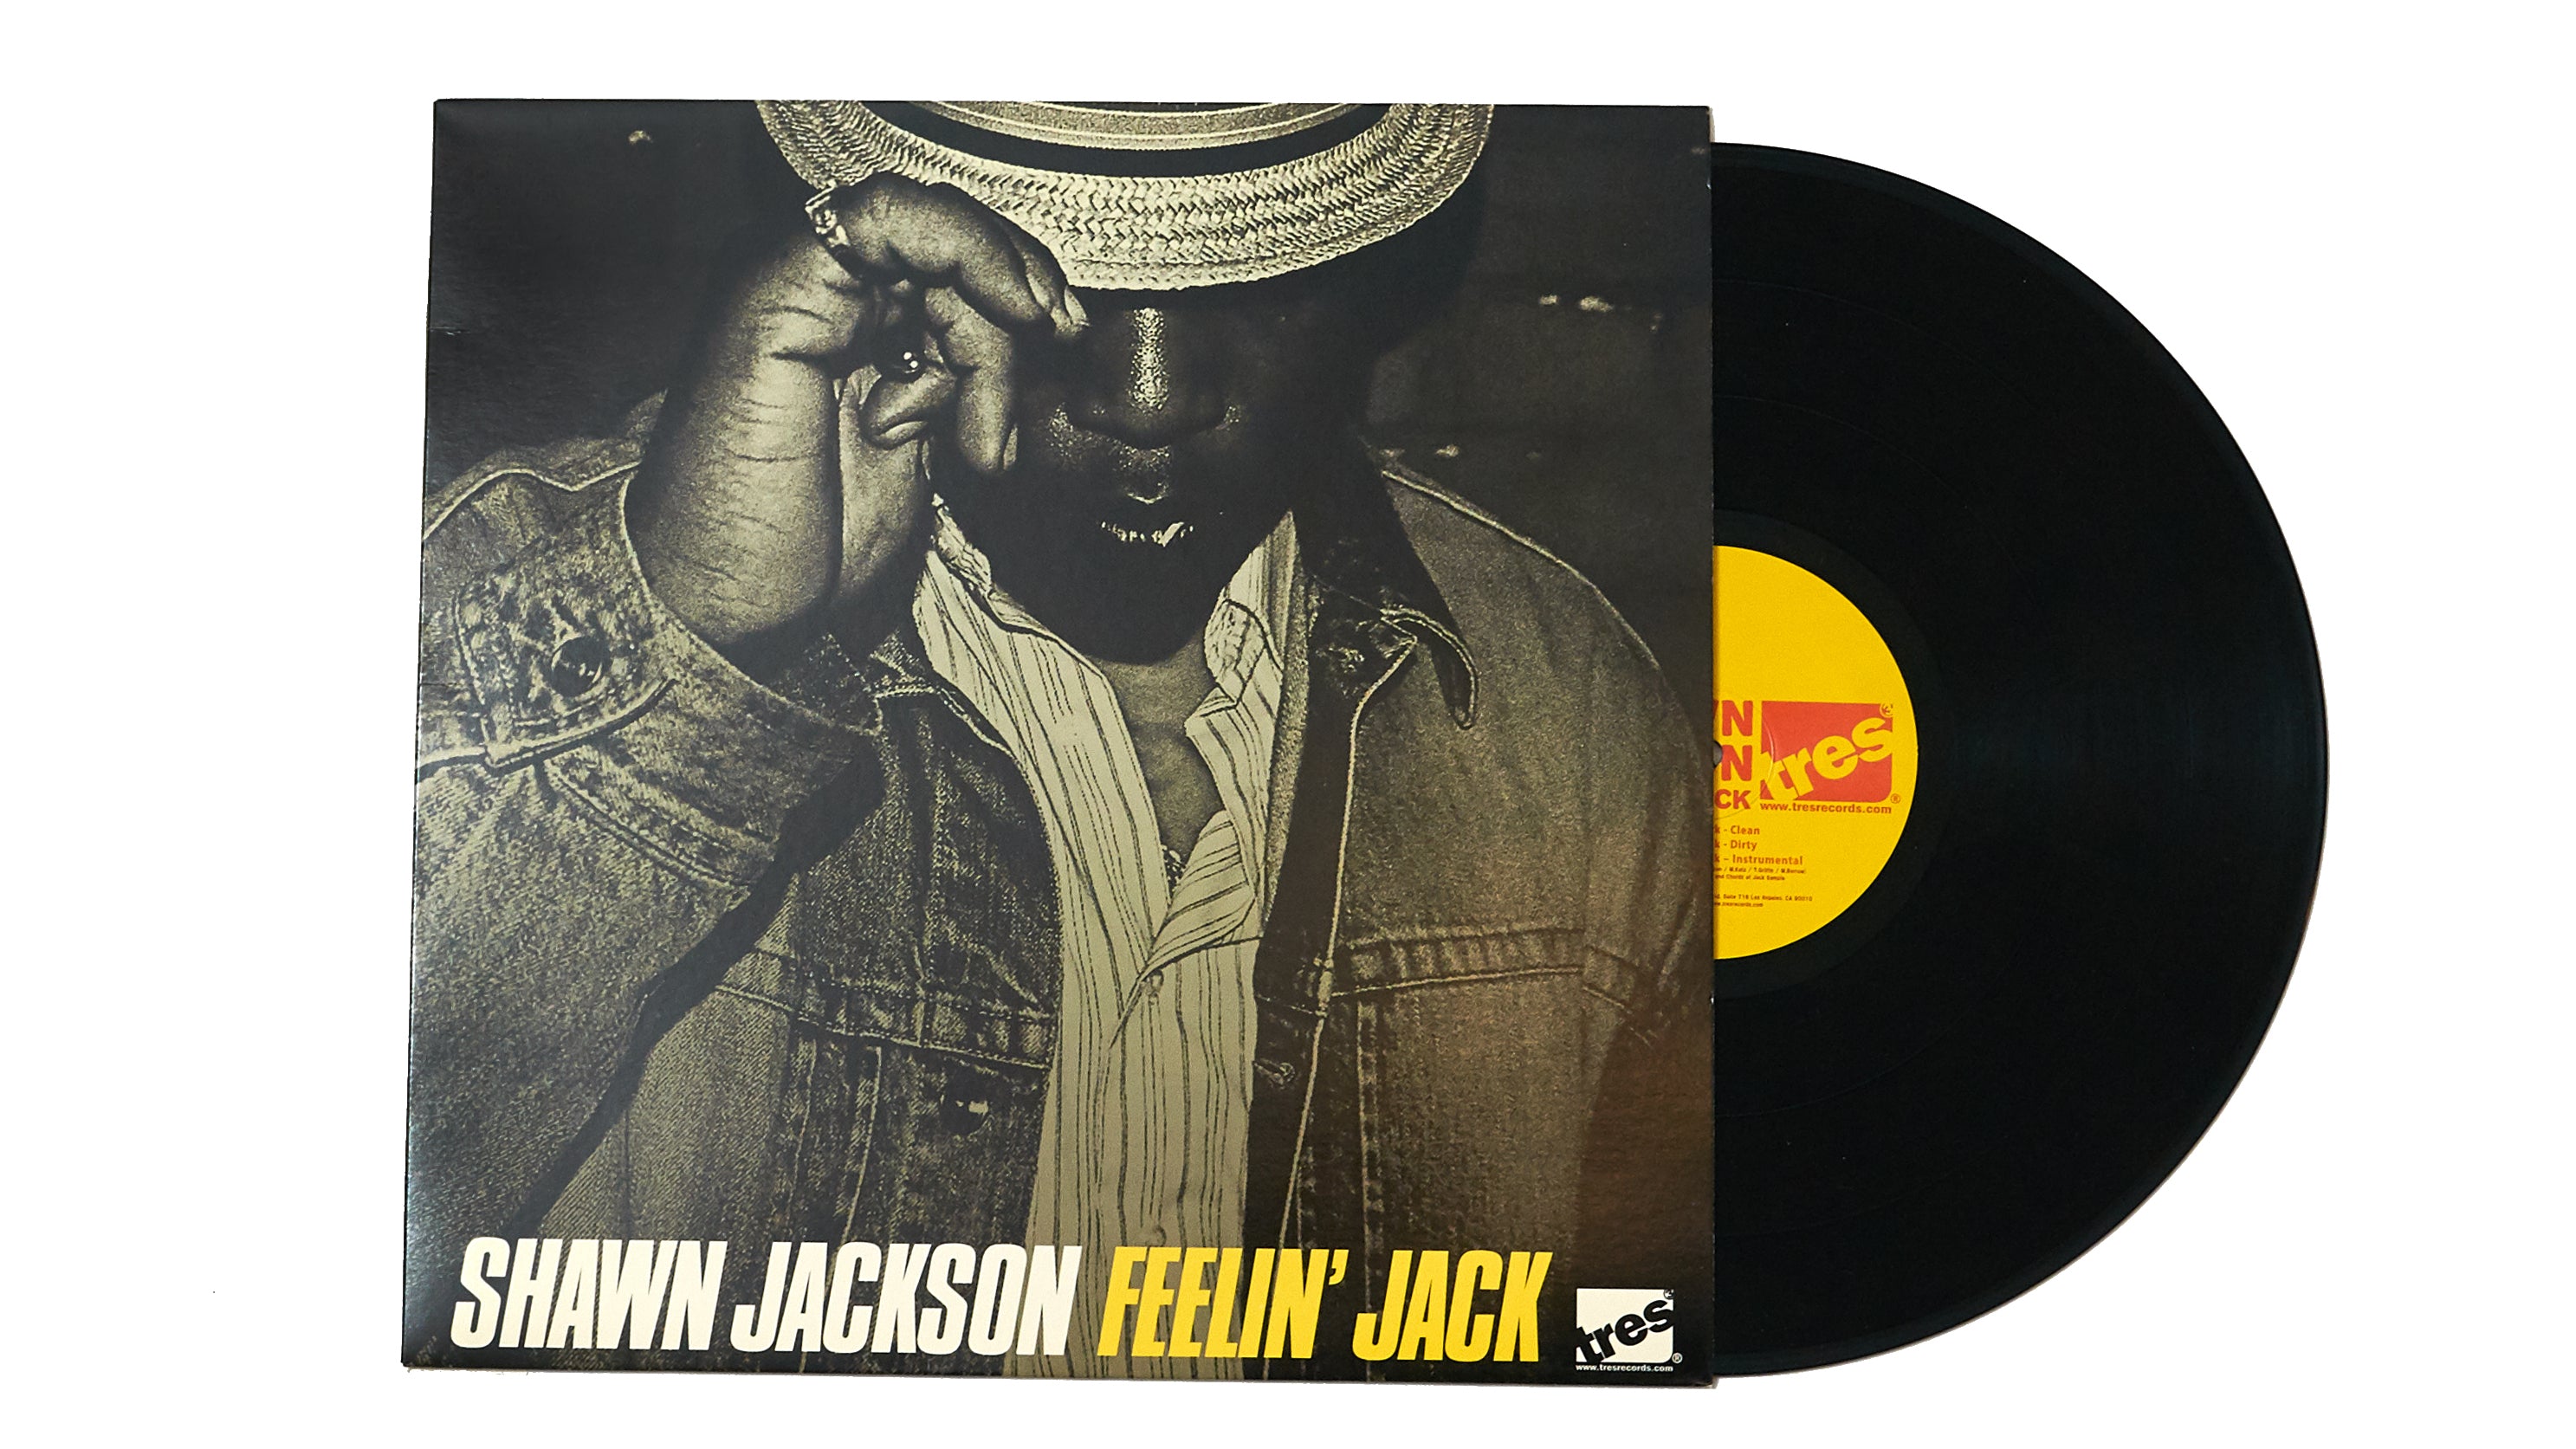 Shawn Jackson "Feelin Jack" (12")